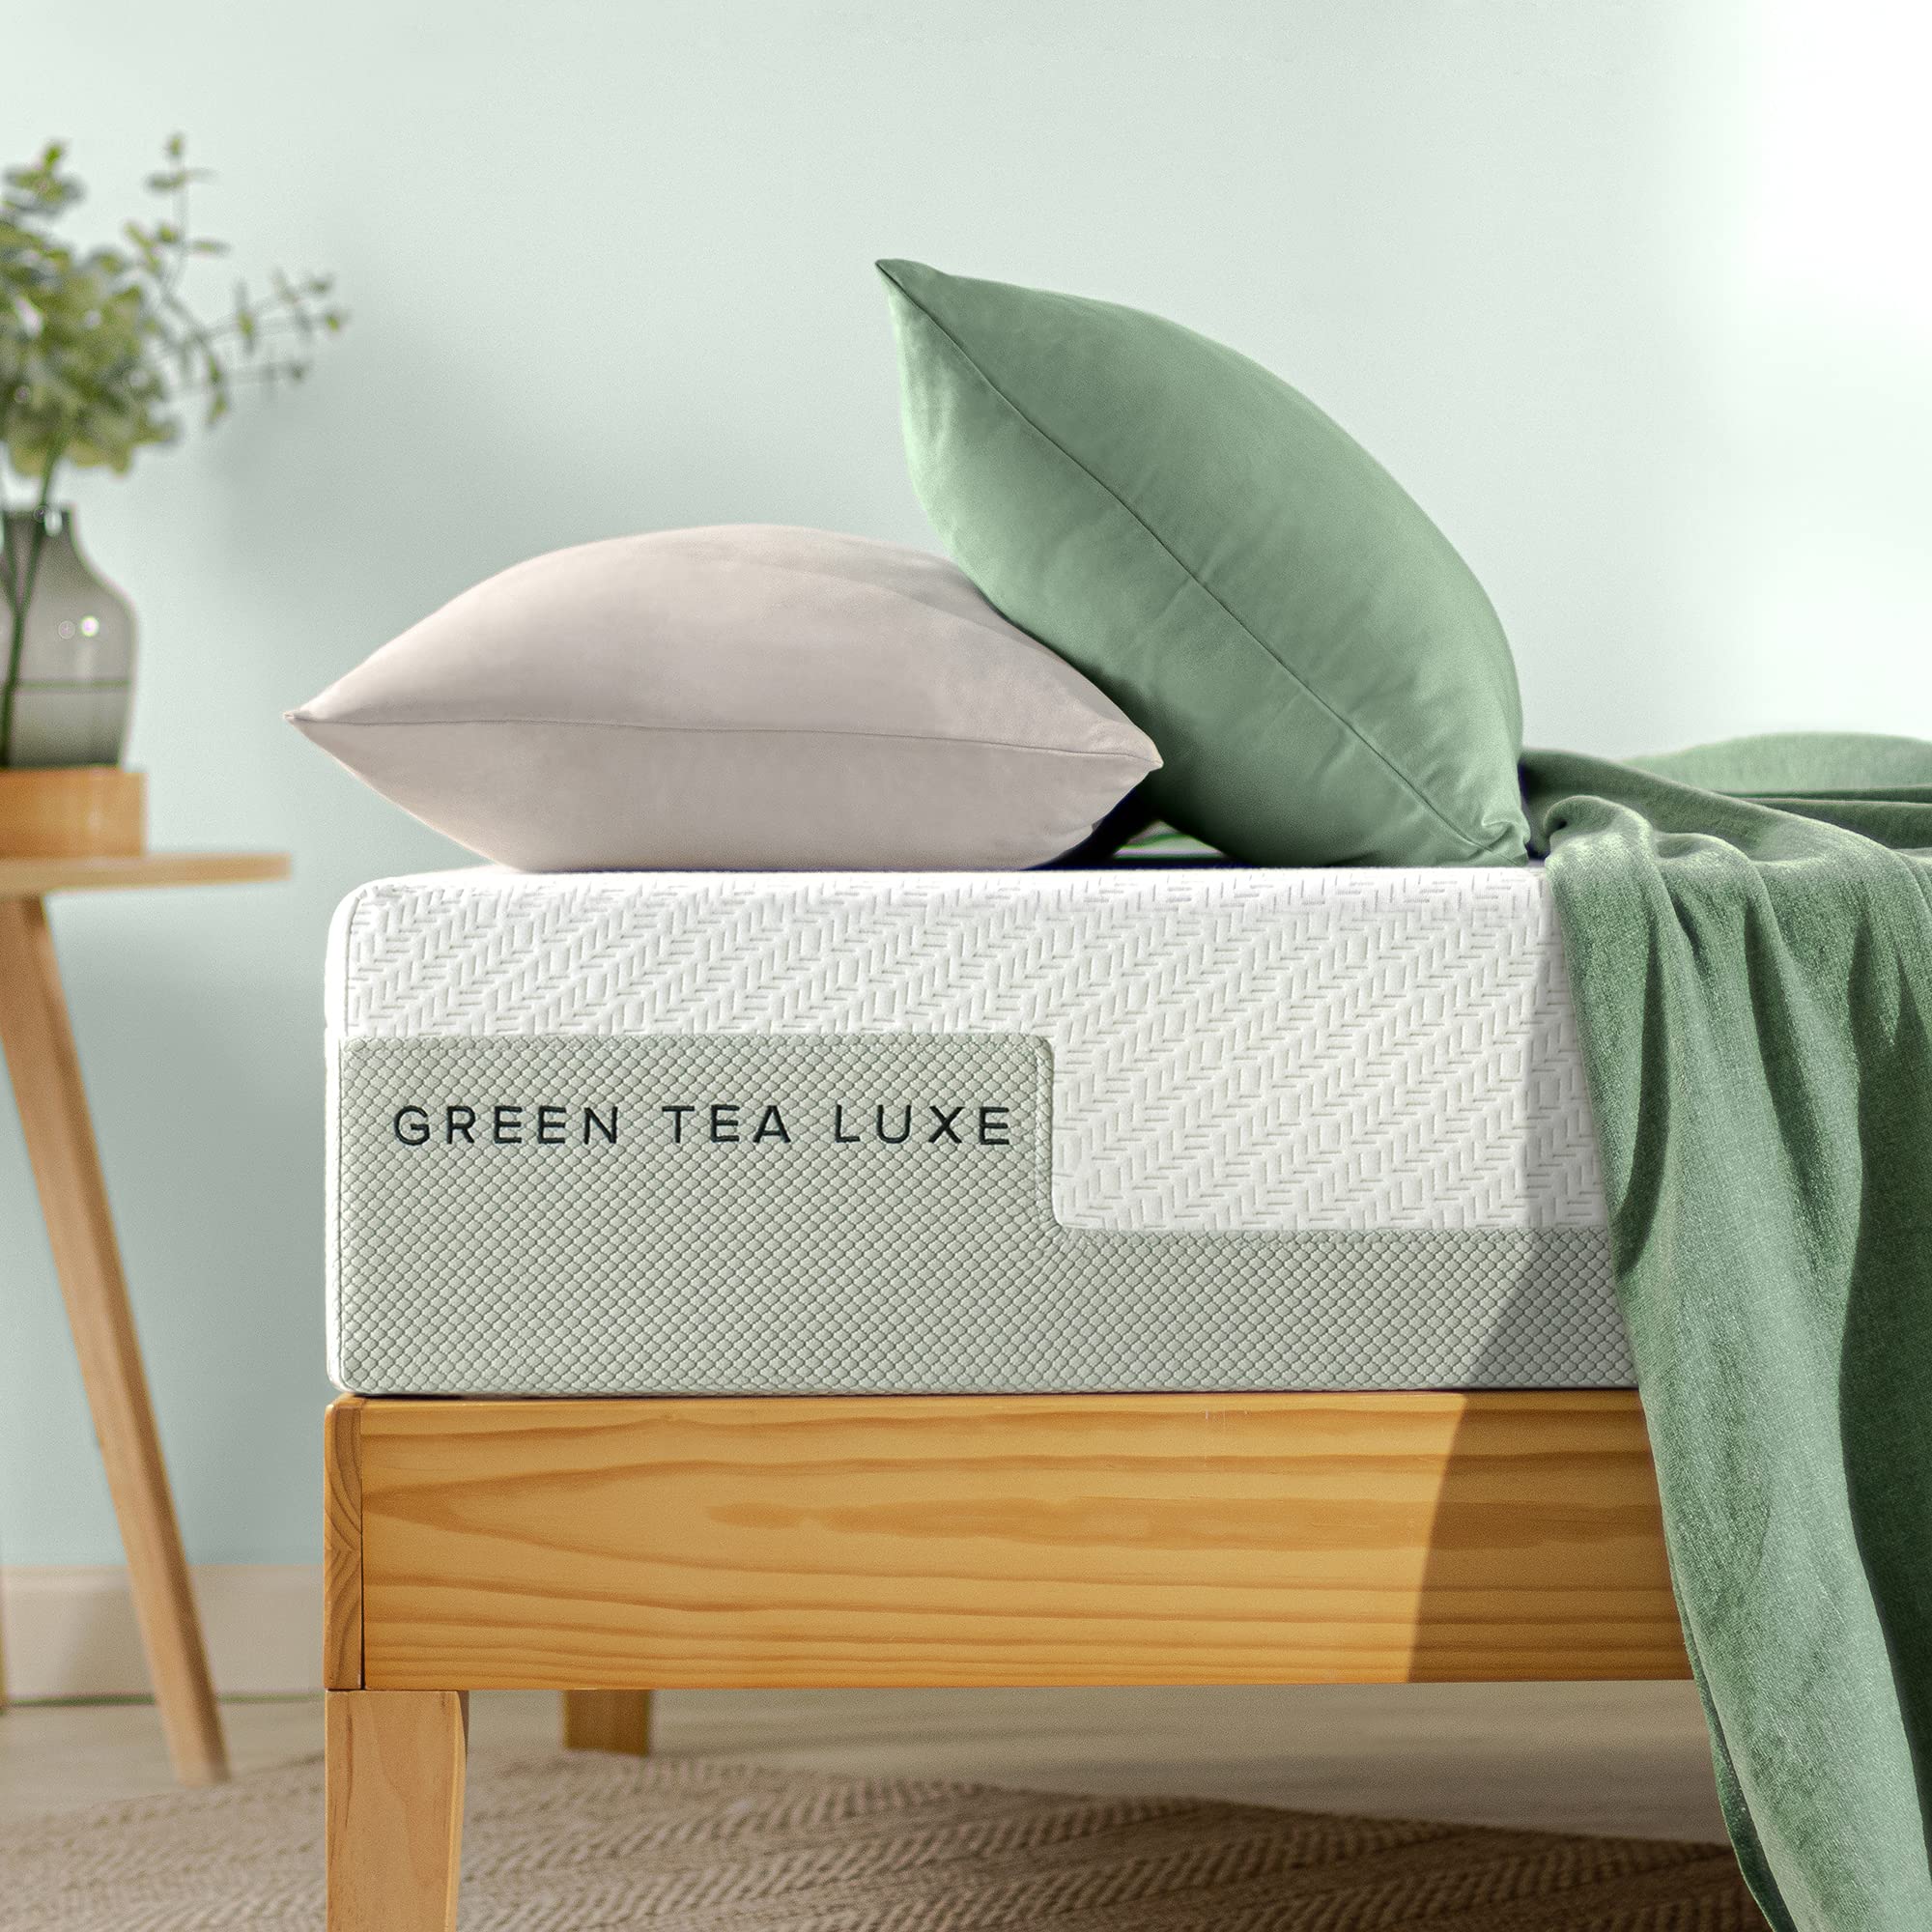 10" Zinus Green Tea Luxe Memory Foam Mattress (King, Made in USA) $259 + Free Shipping